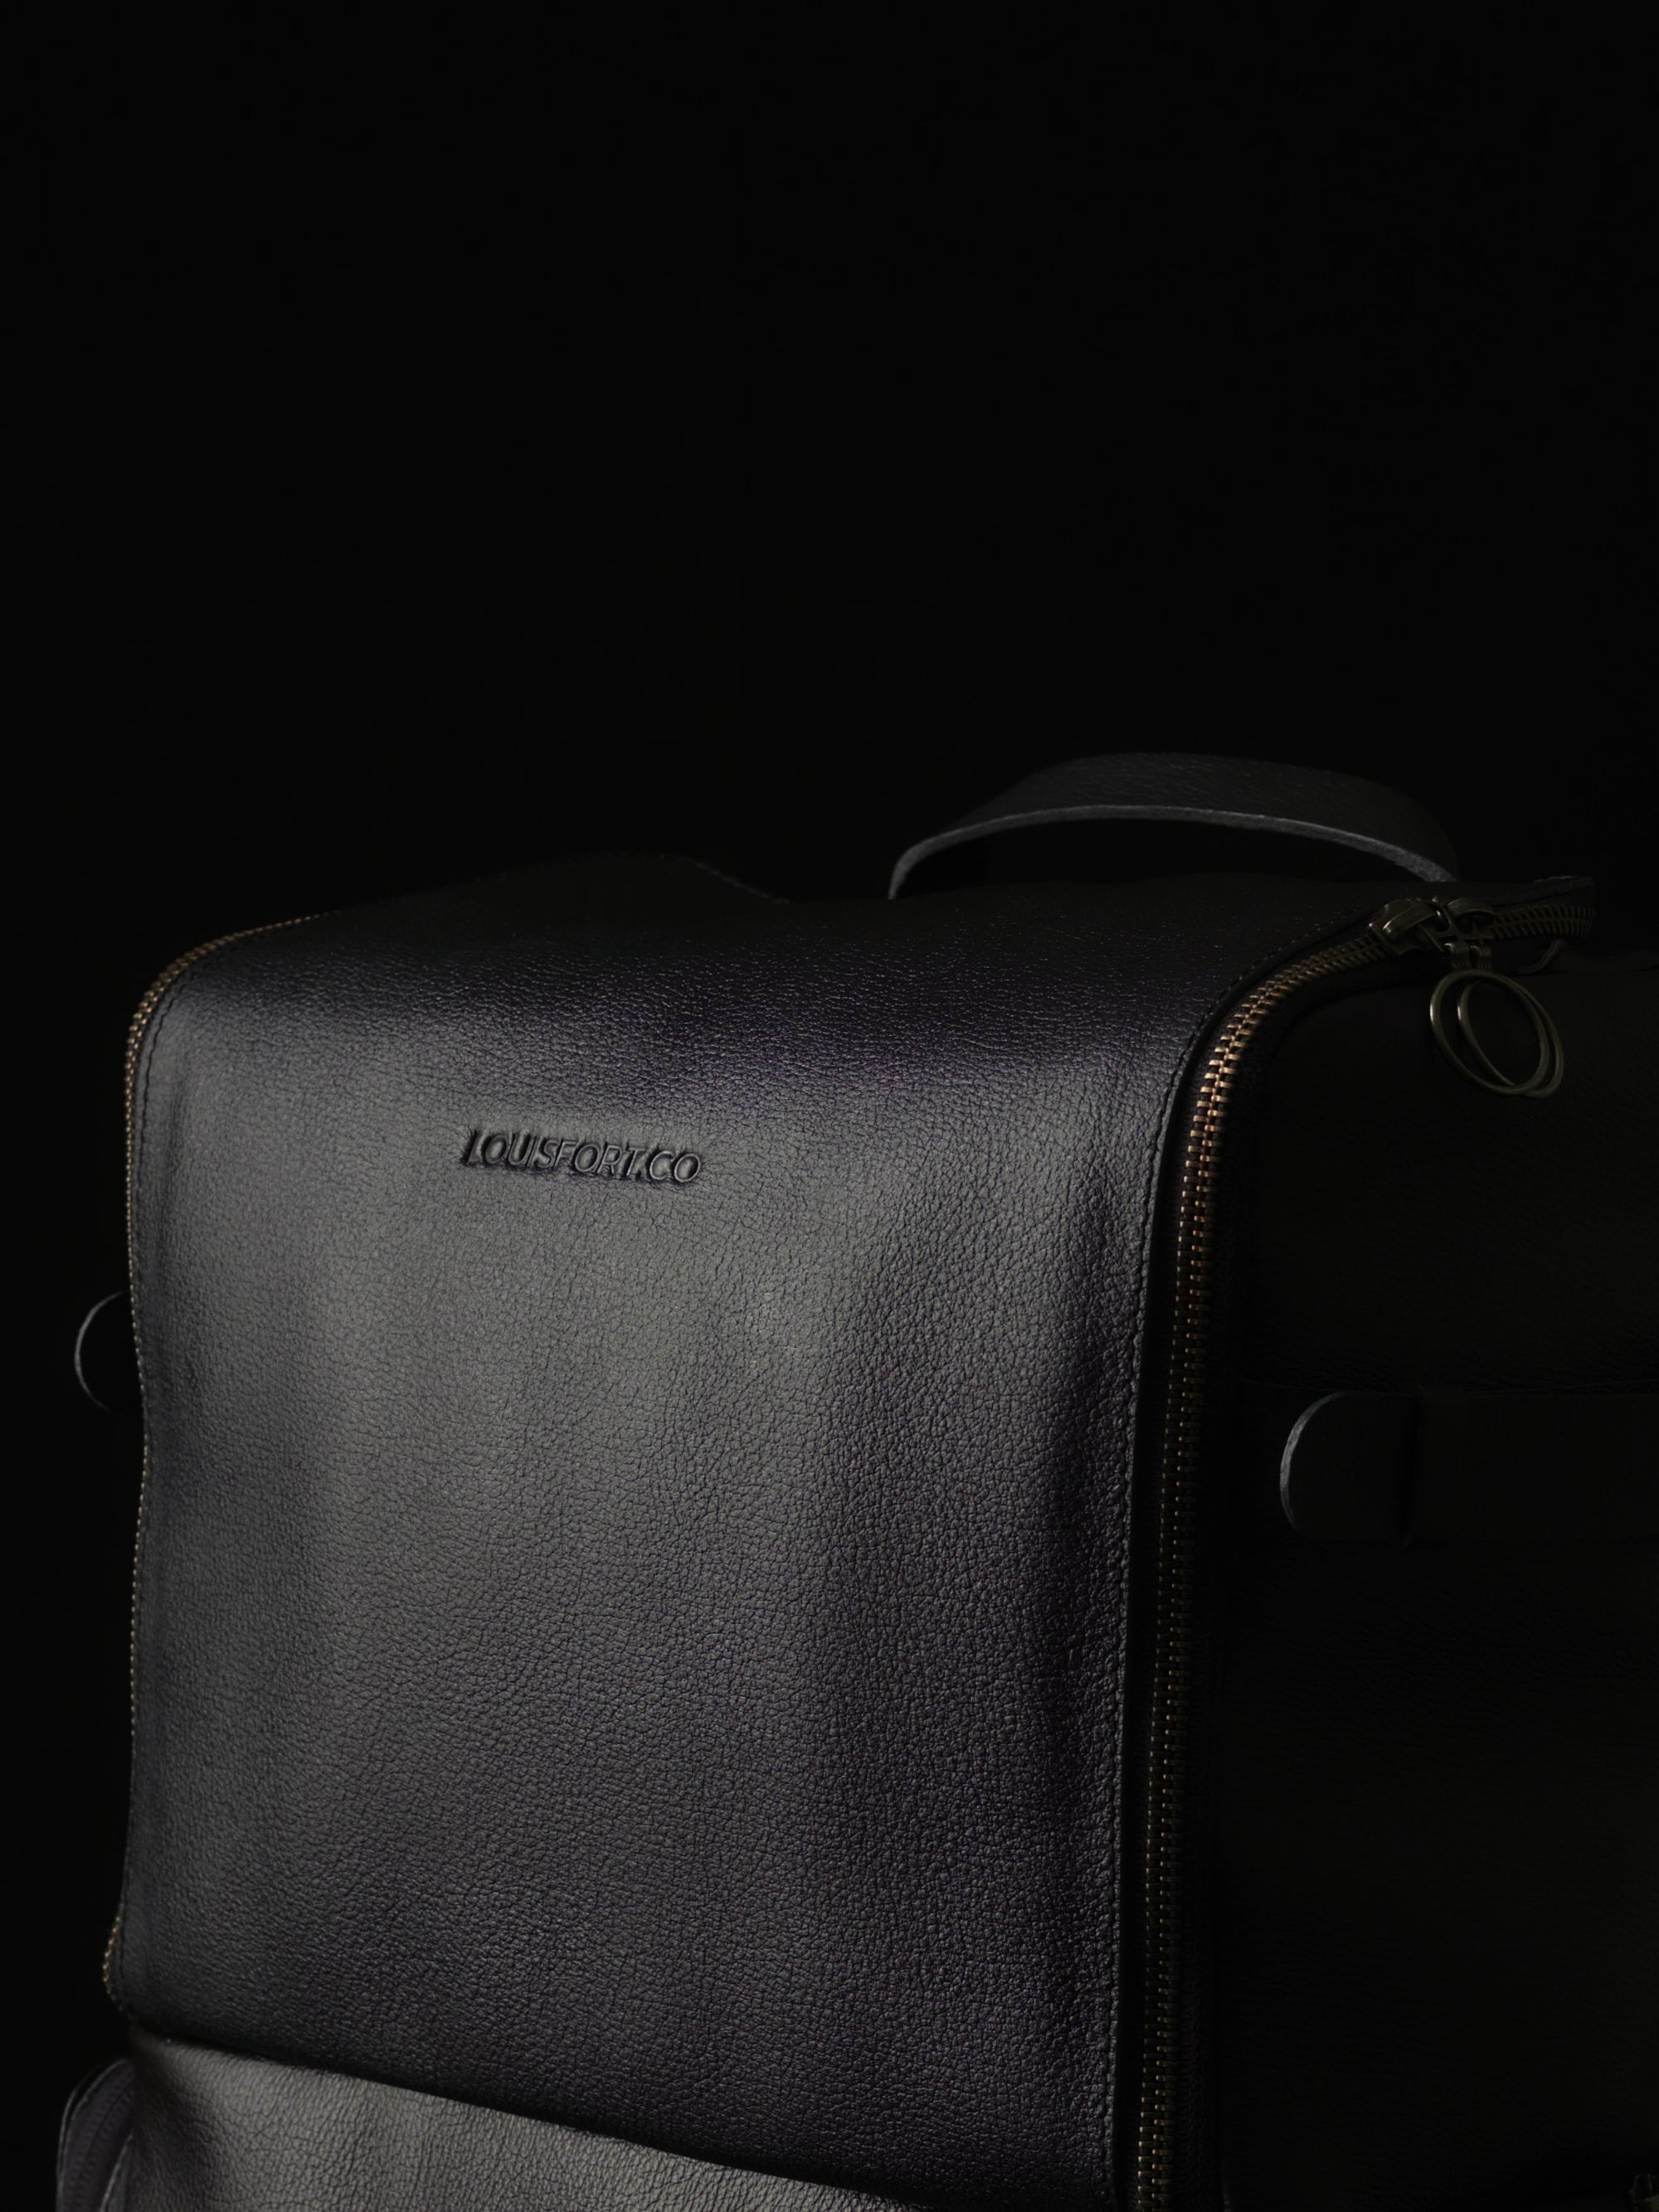 backpack camera bag black by capra leather